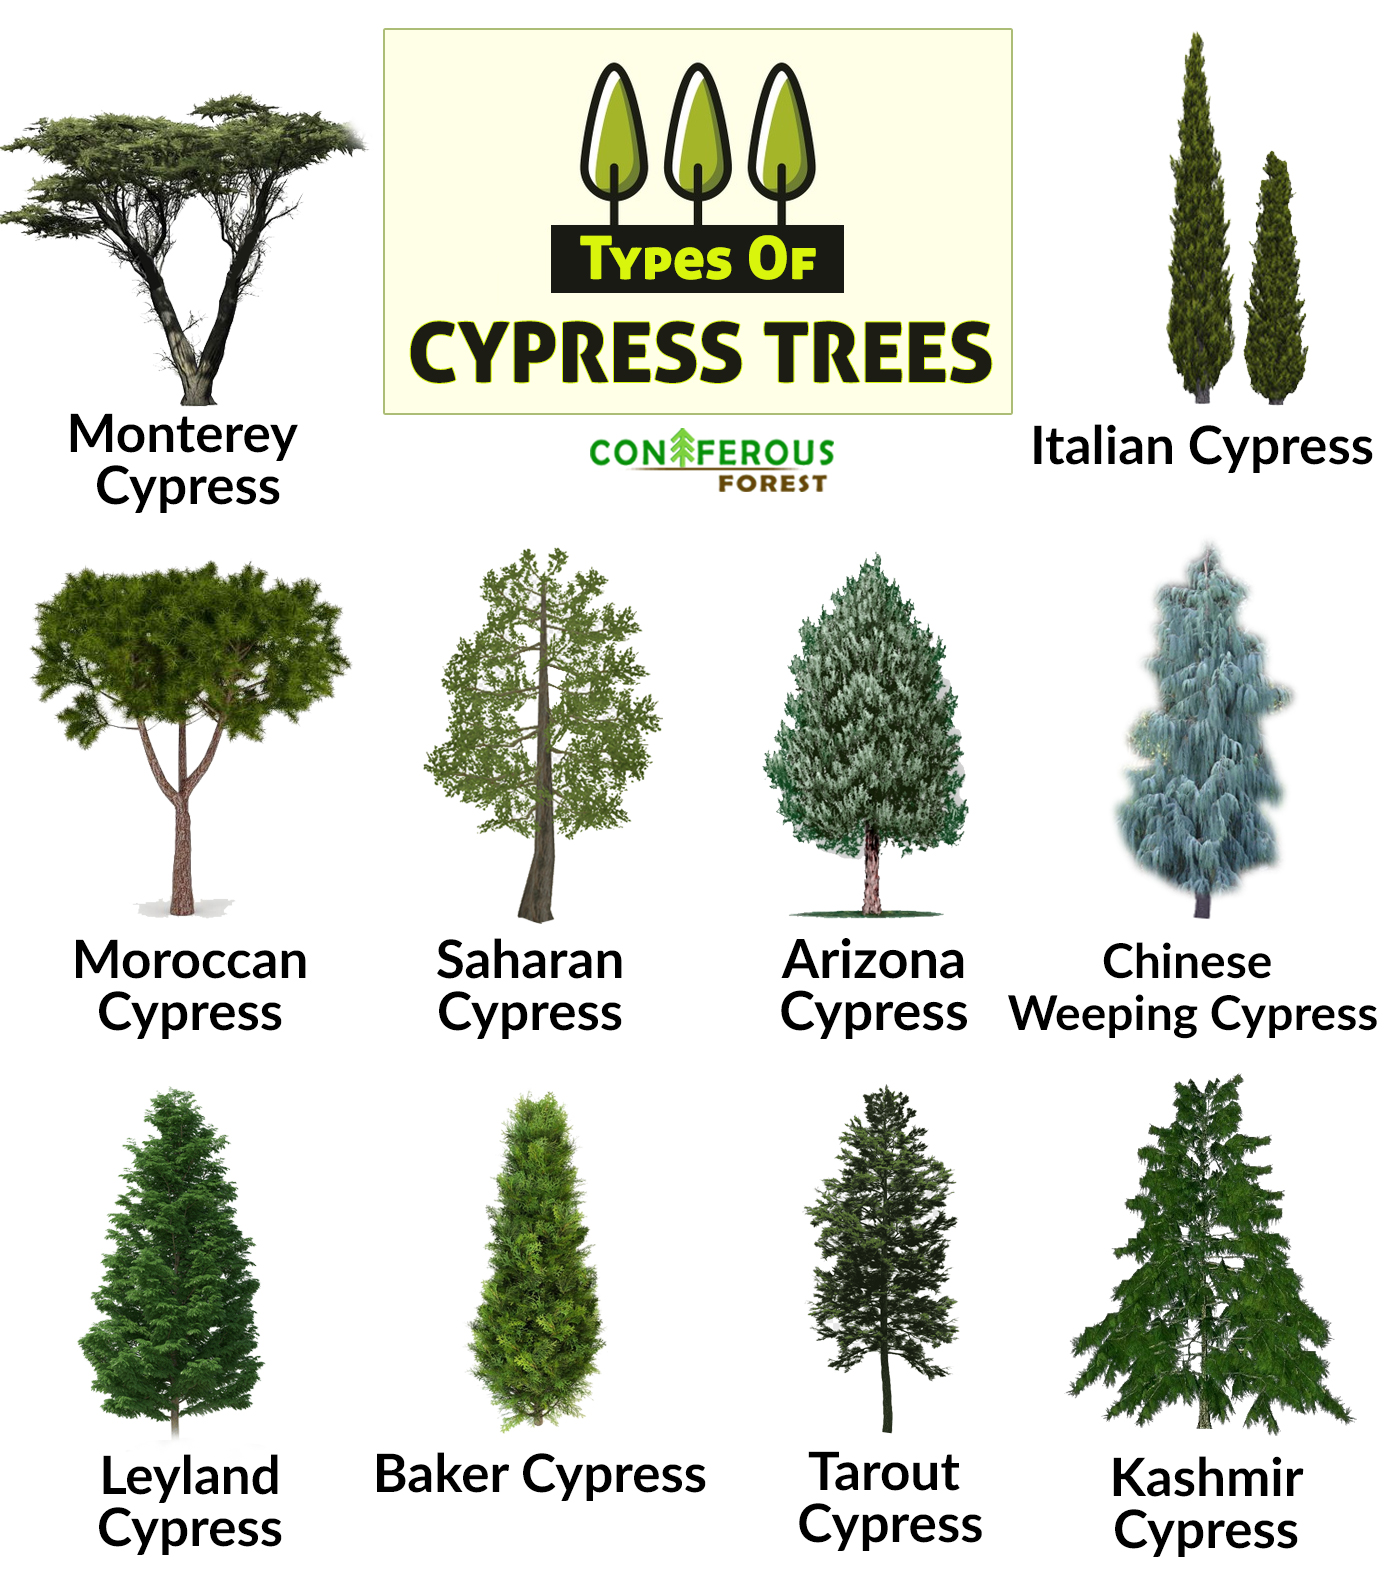 pine coniferousforest